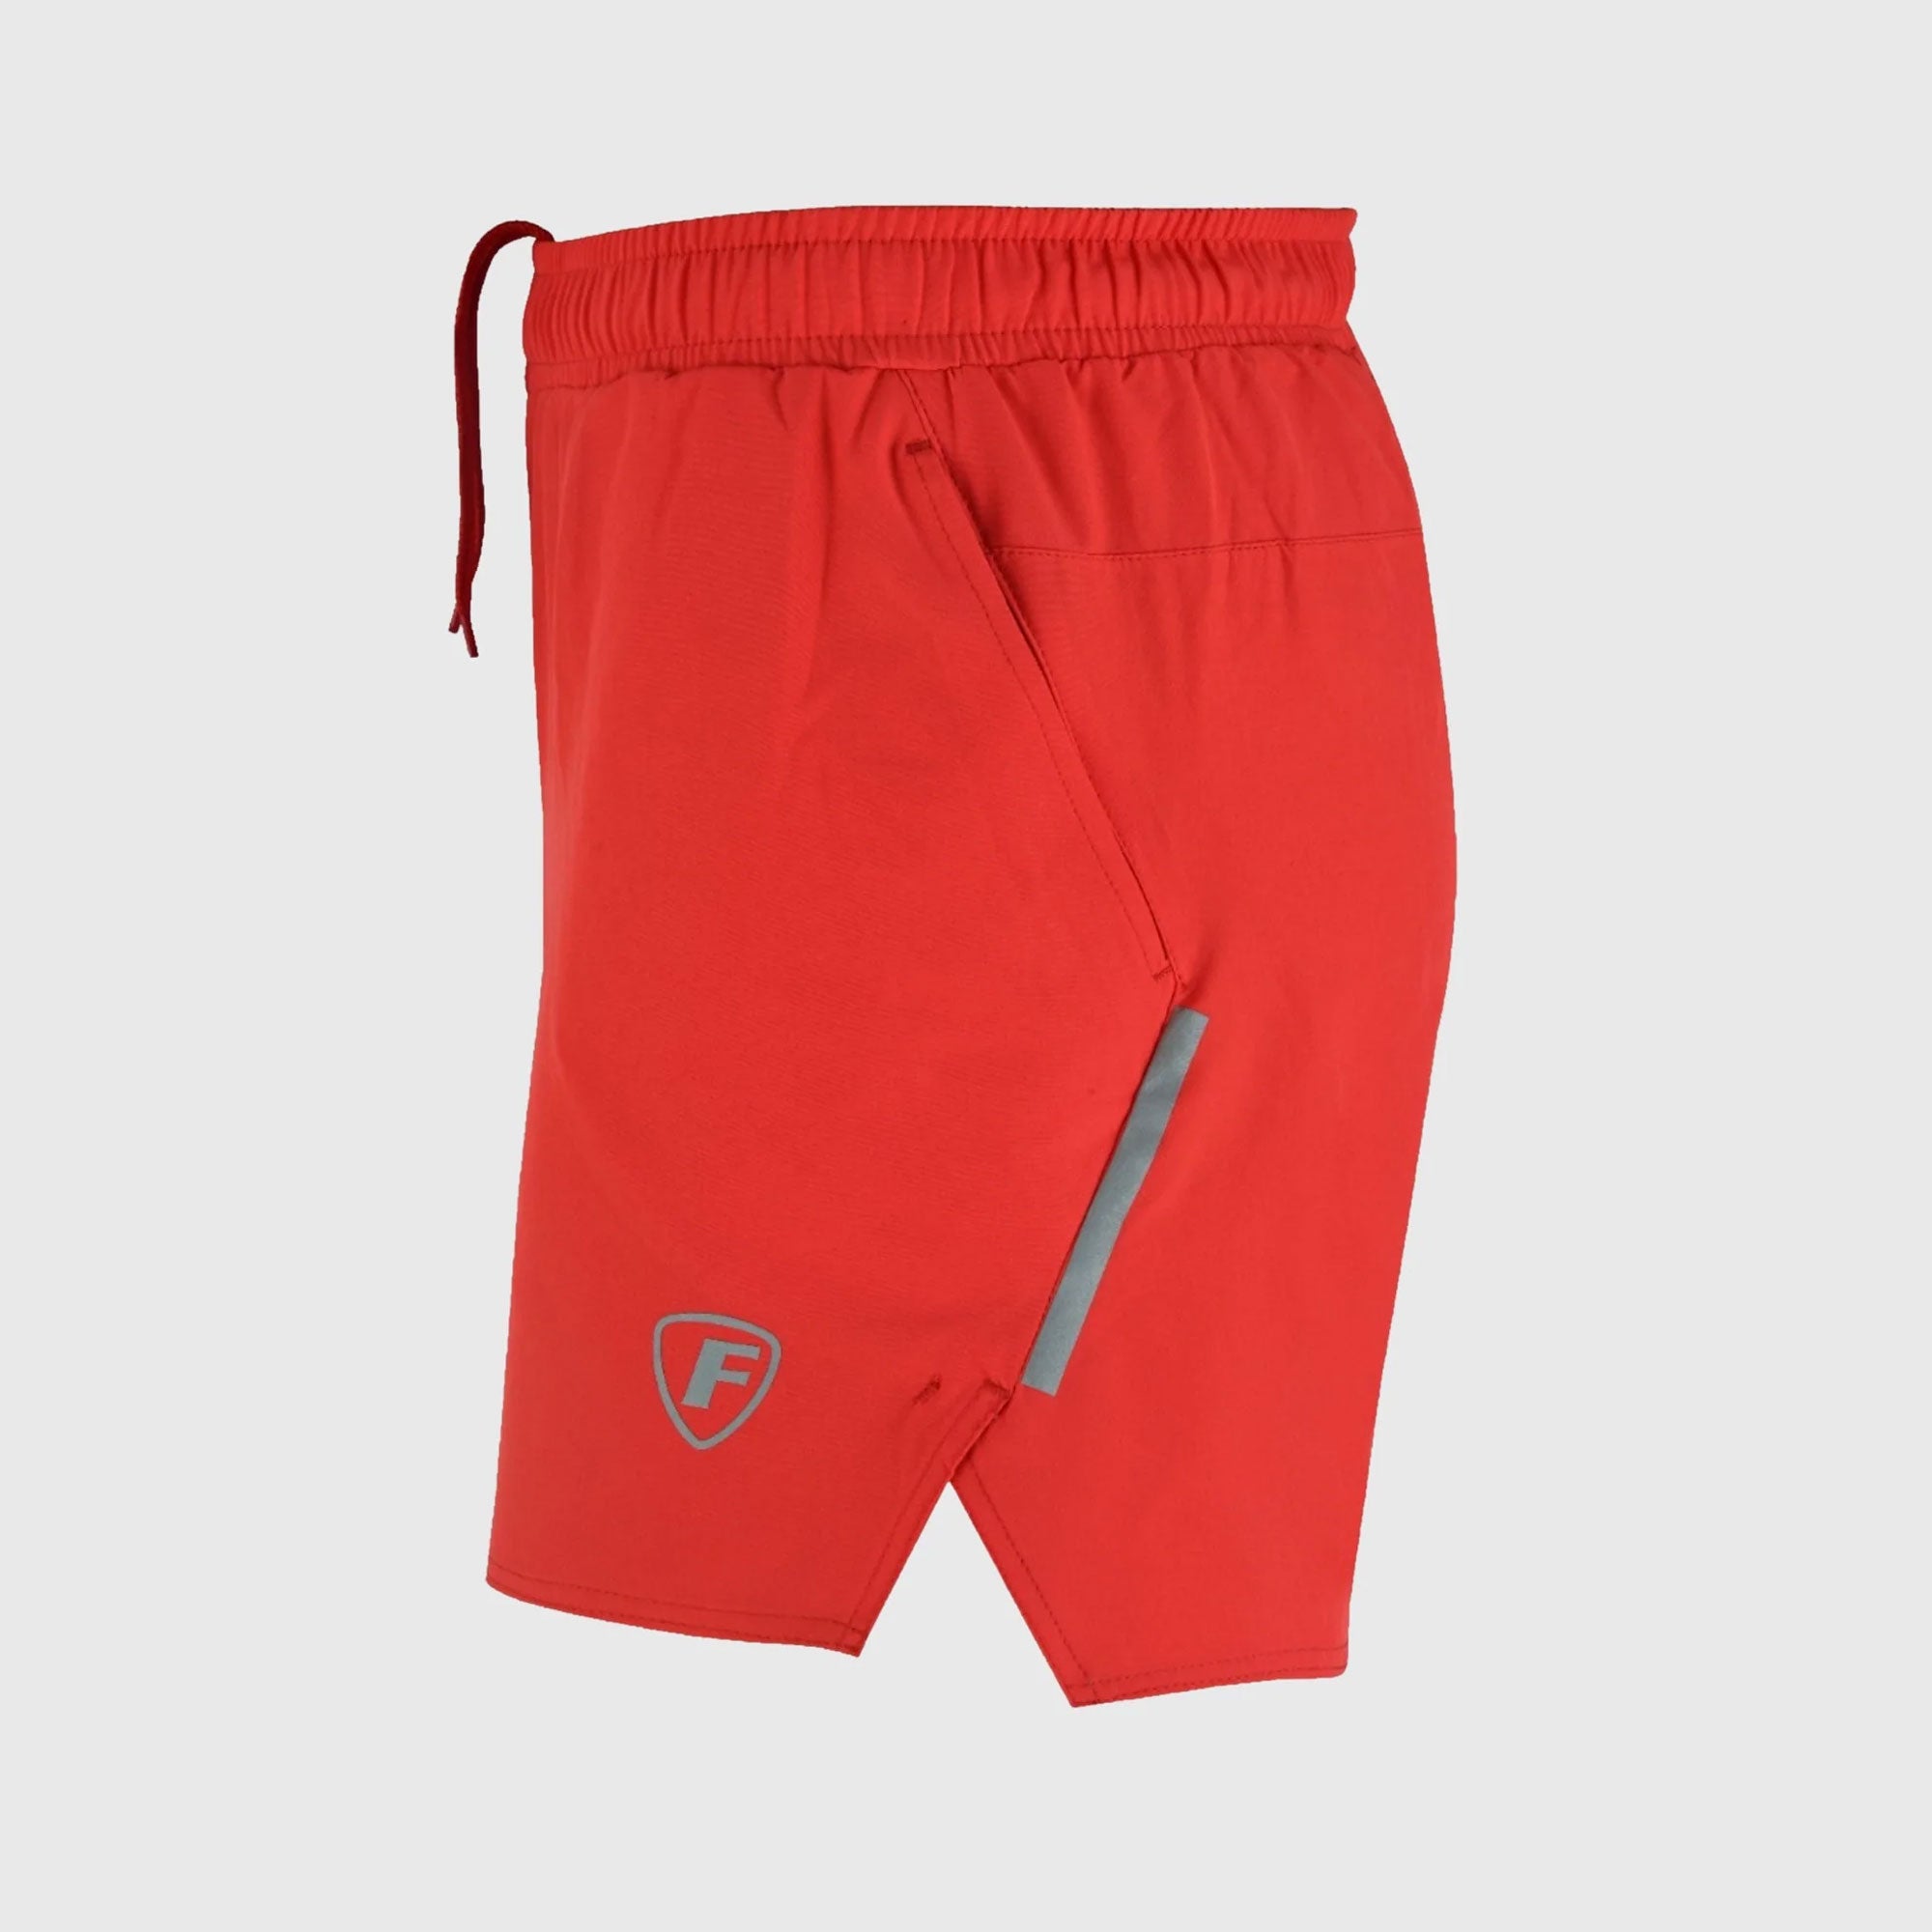 FDX Men's Red Breathable Running Shorts Waist Belt Anti Odor Moisture Wicking & Perfect for Trekking, Tennis, squash & Gym Sports & Outdoor